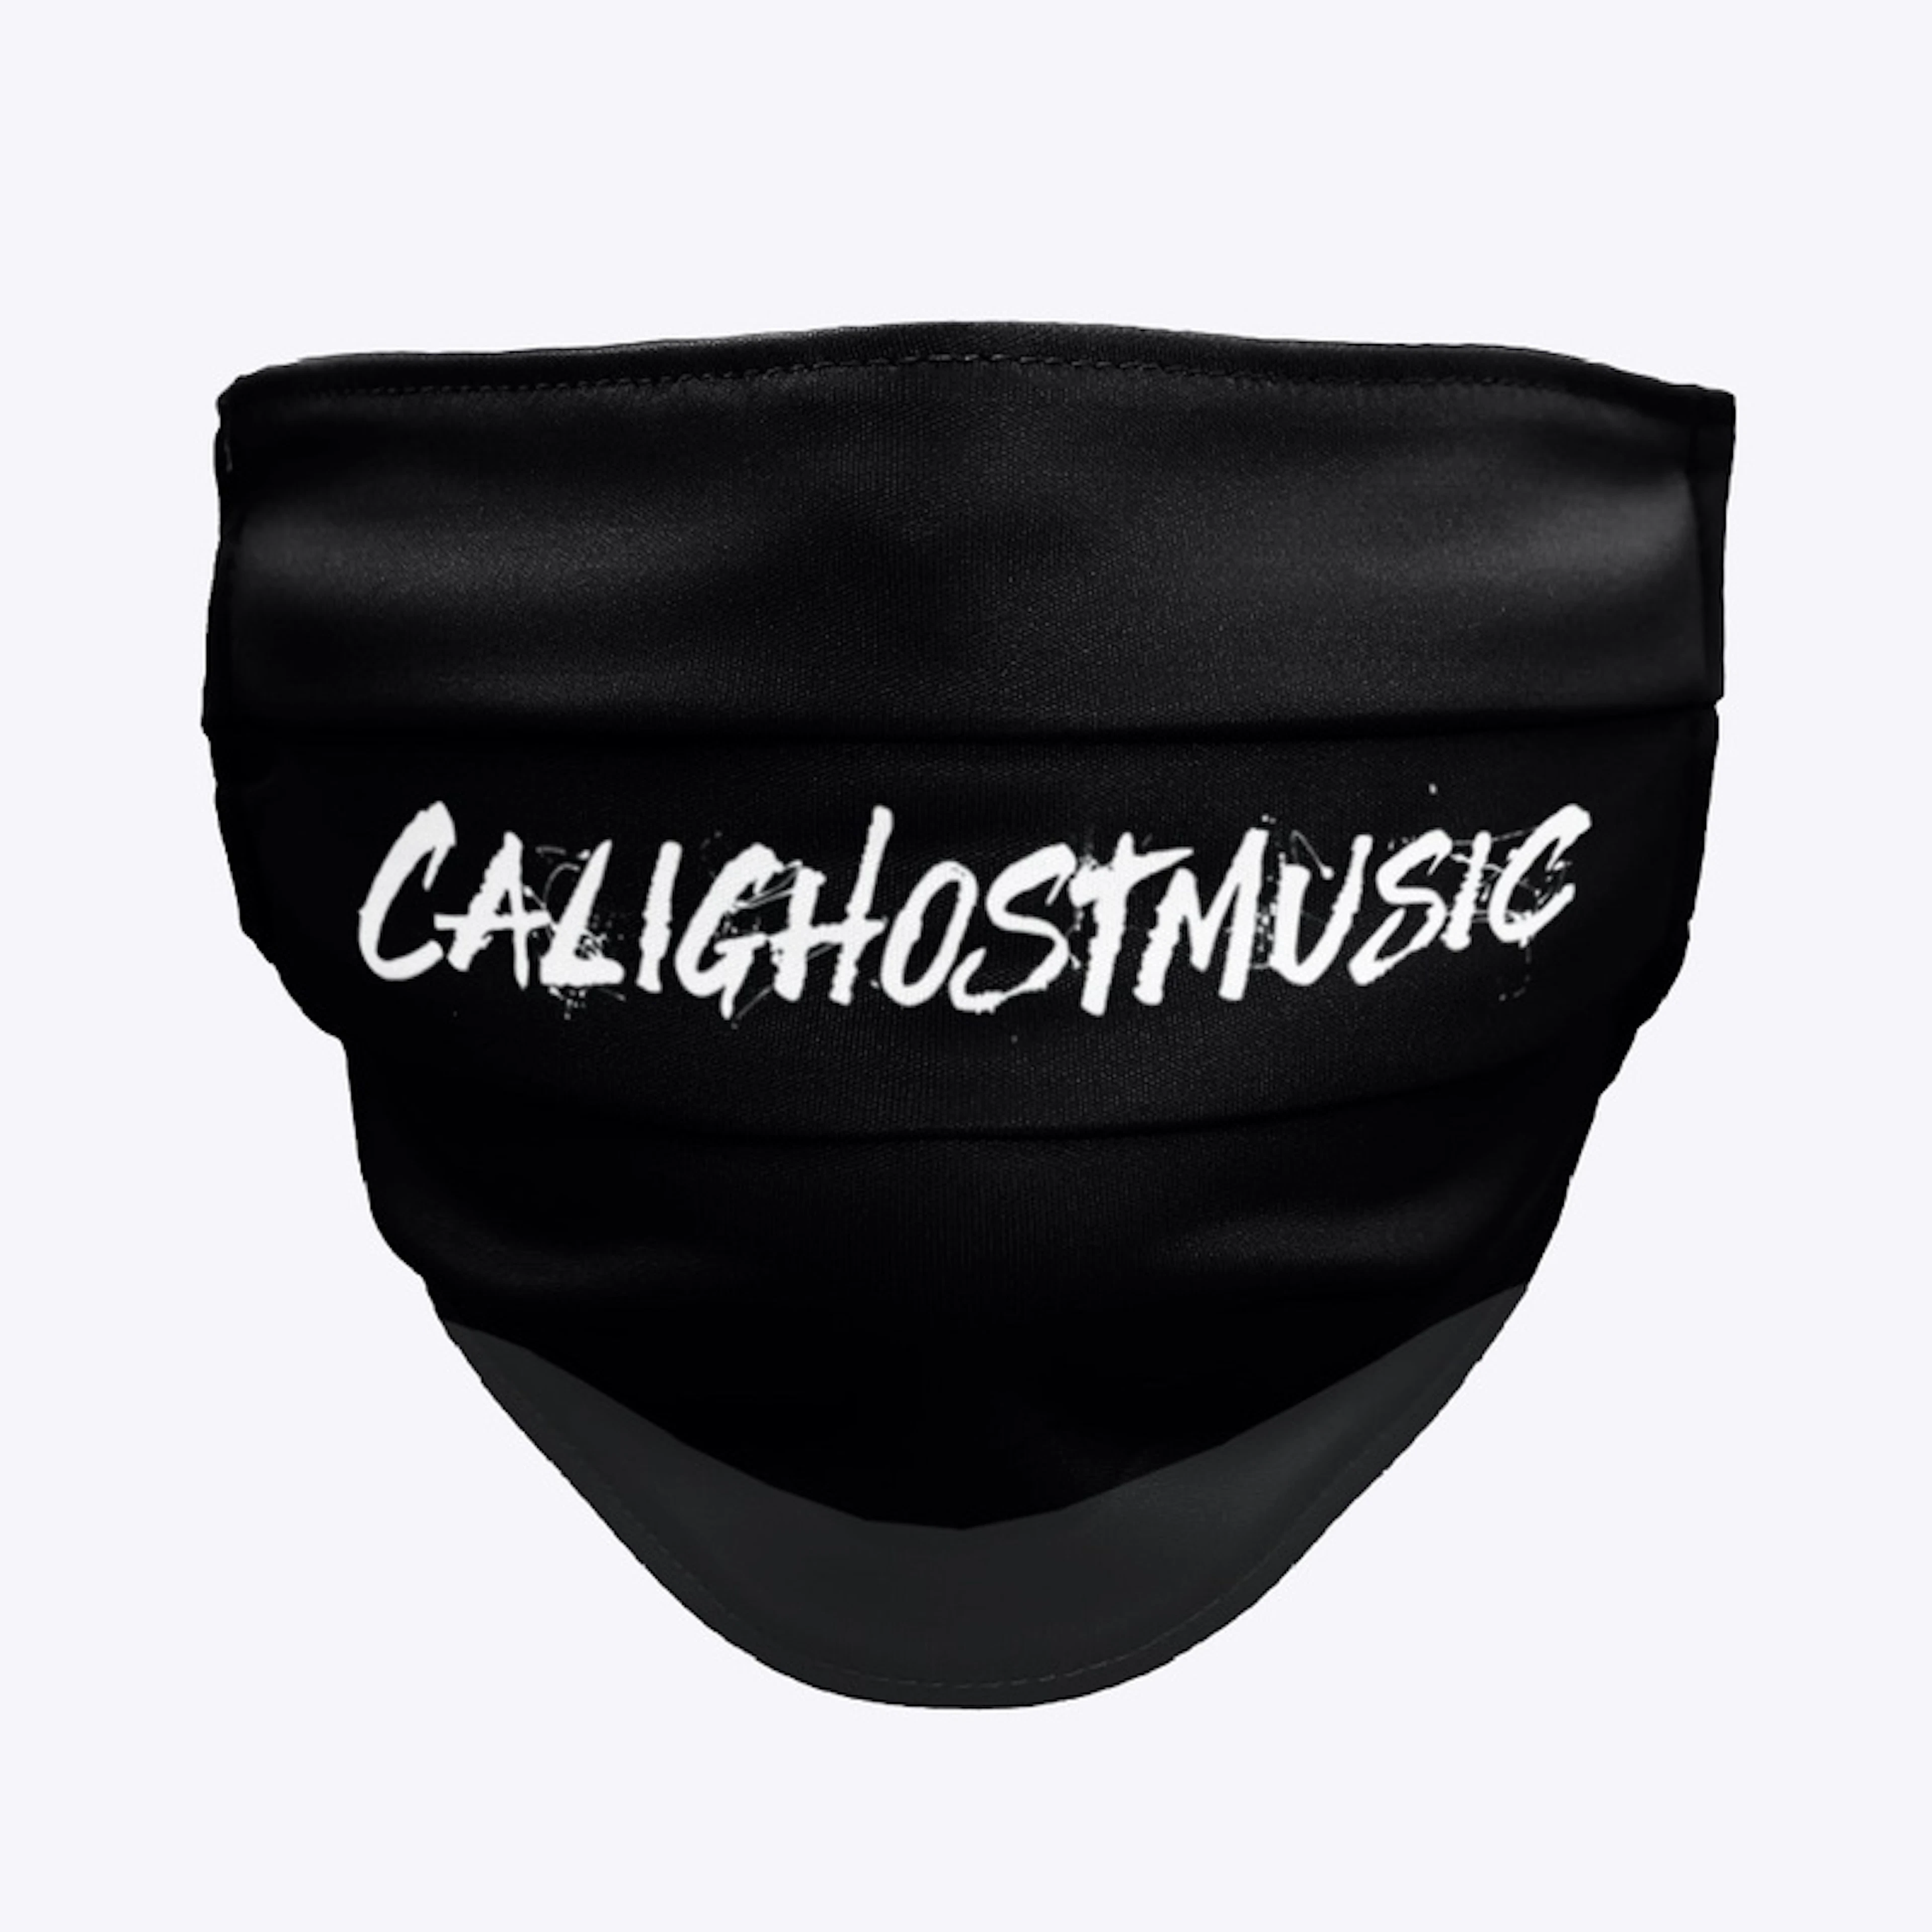 Calighostmusic Black diamond face mask